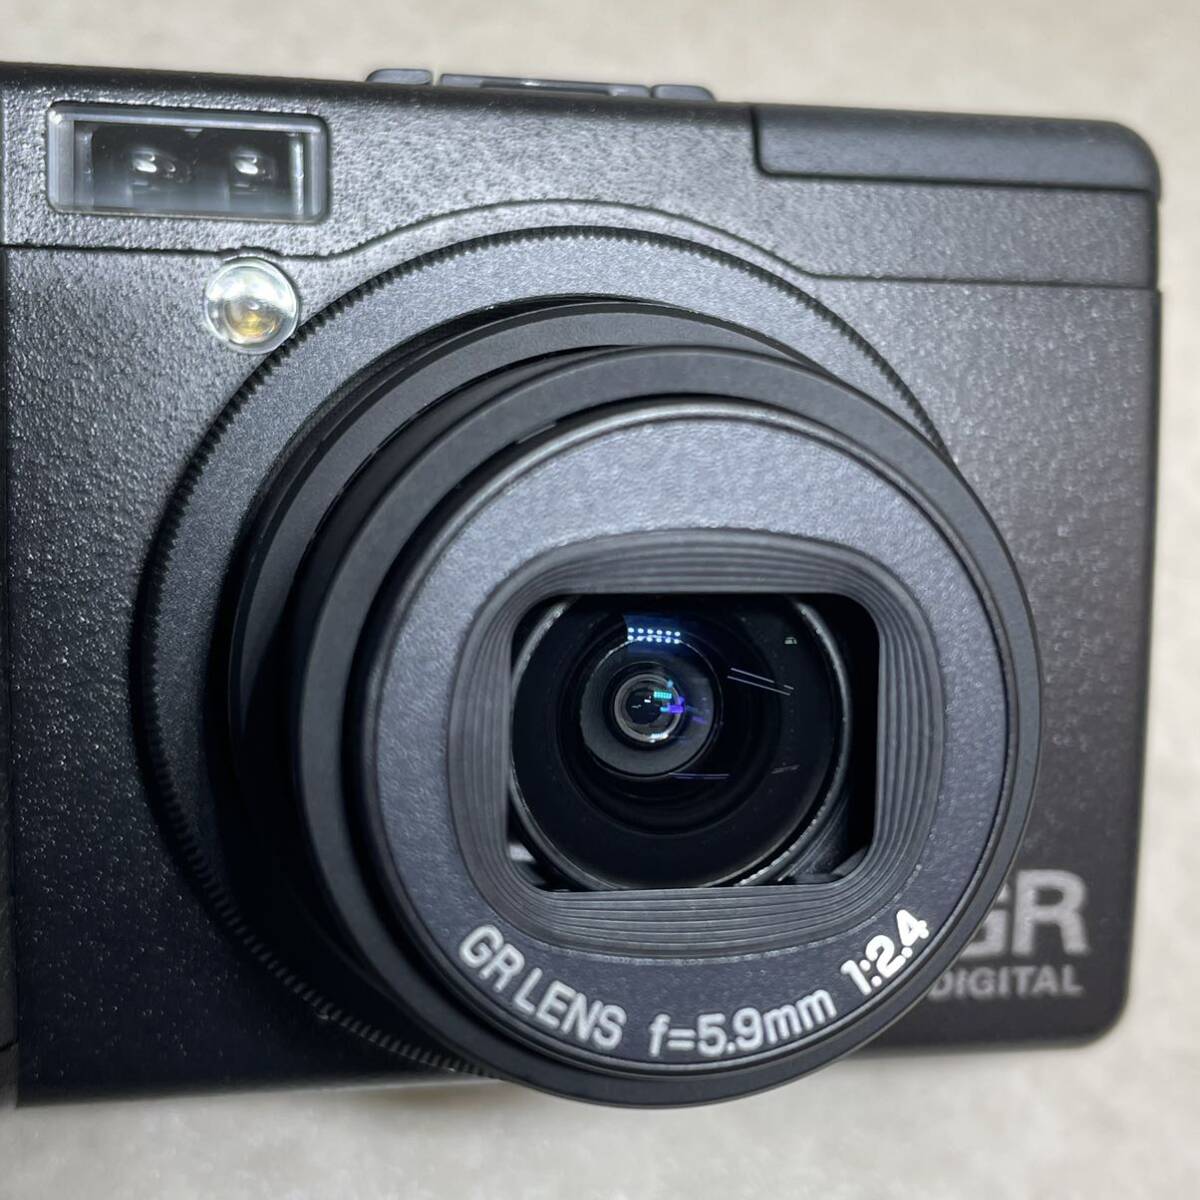 W5-2)RICOH Ricoh GR DIGITAL compact digital camera digital camera (65)